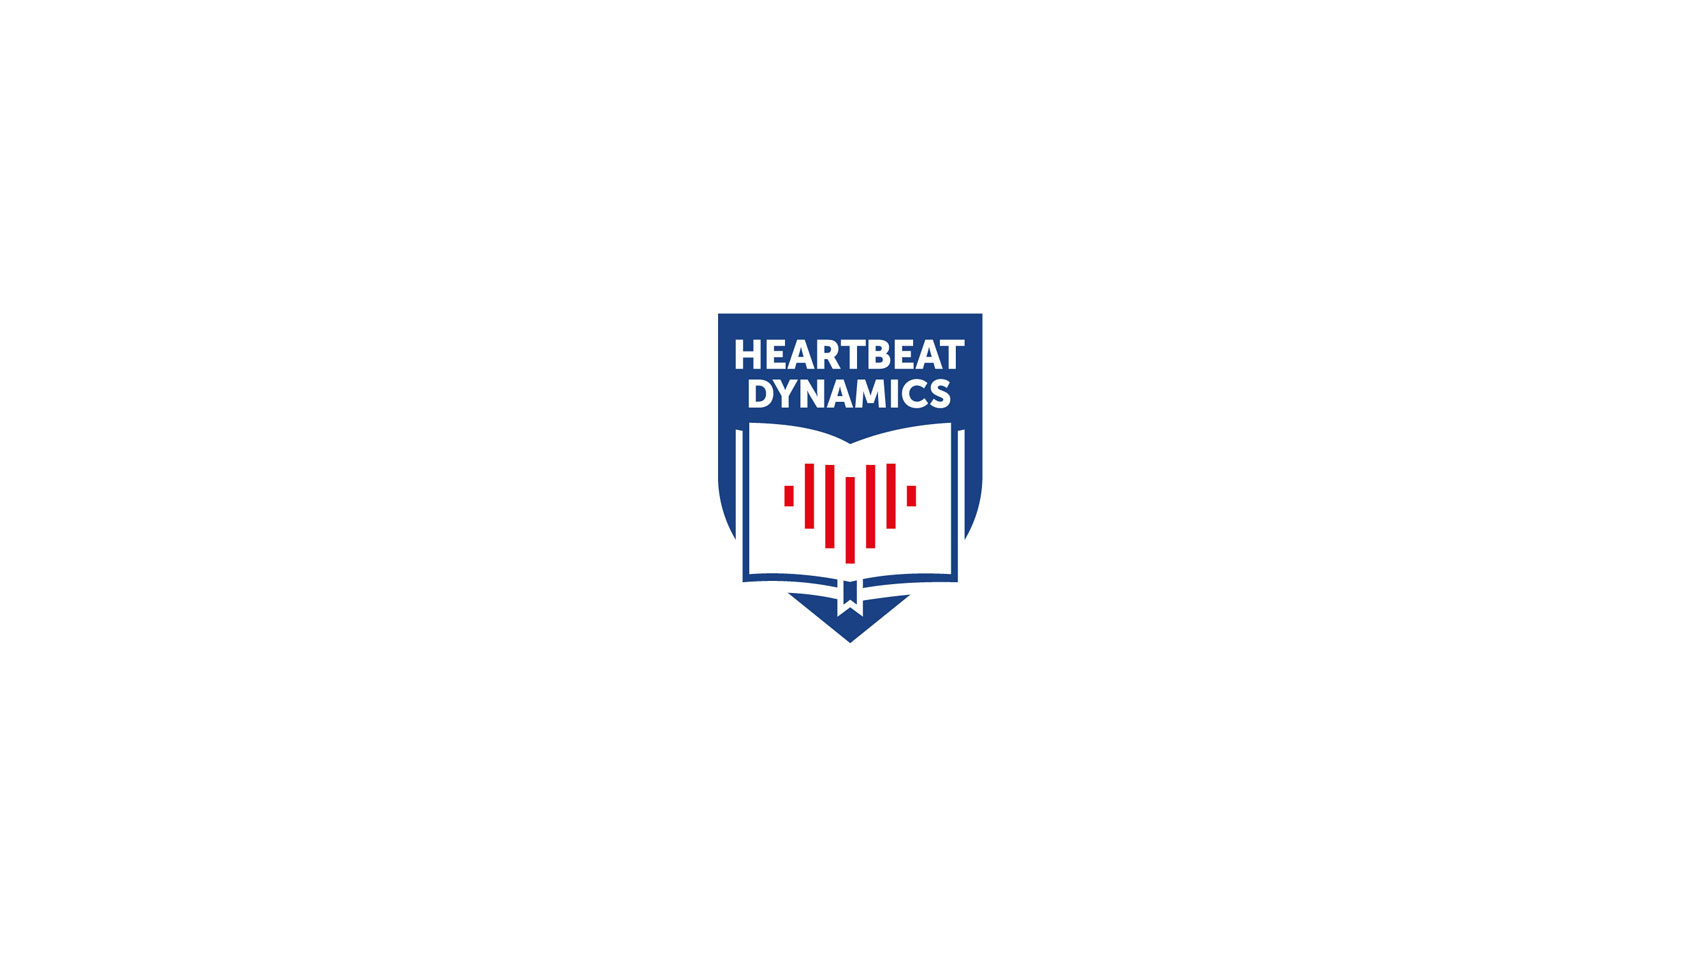 Heartbeat dynamics logo design